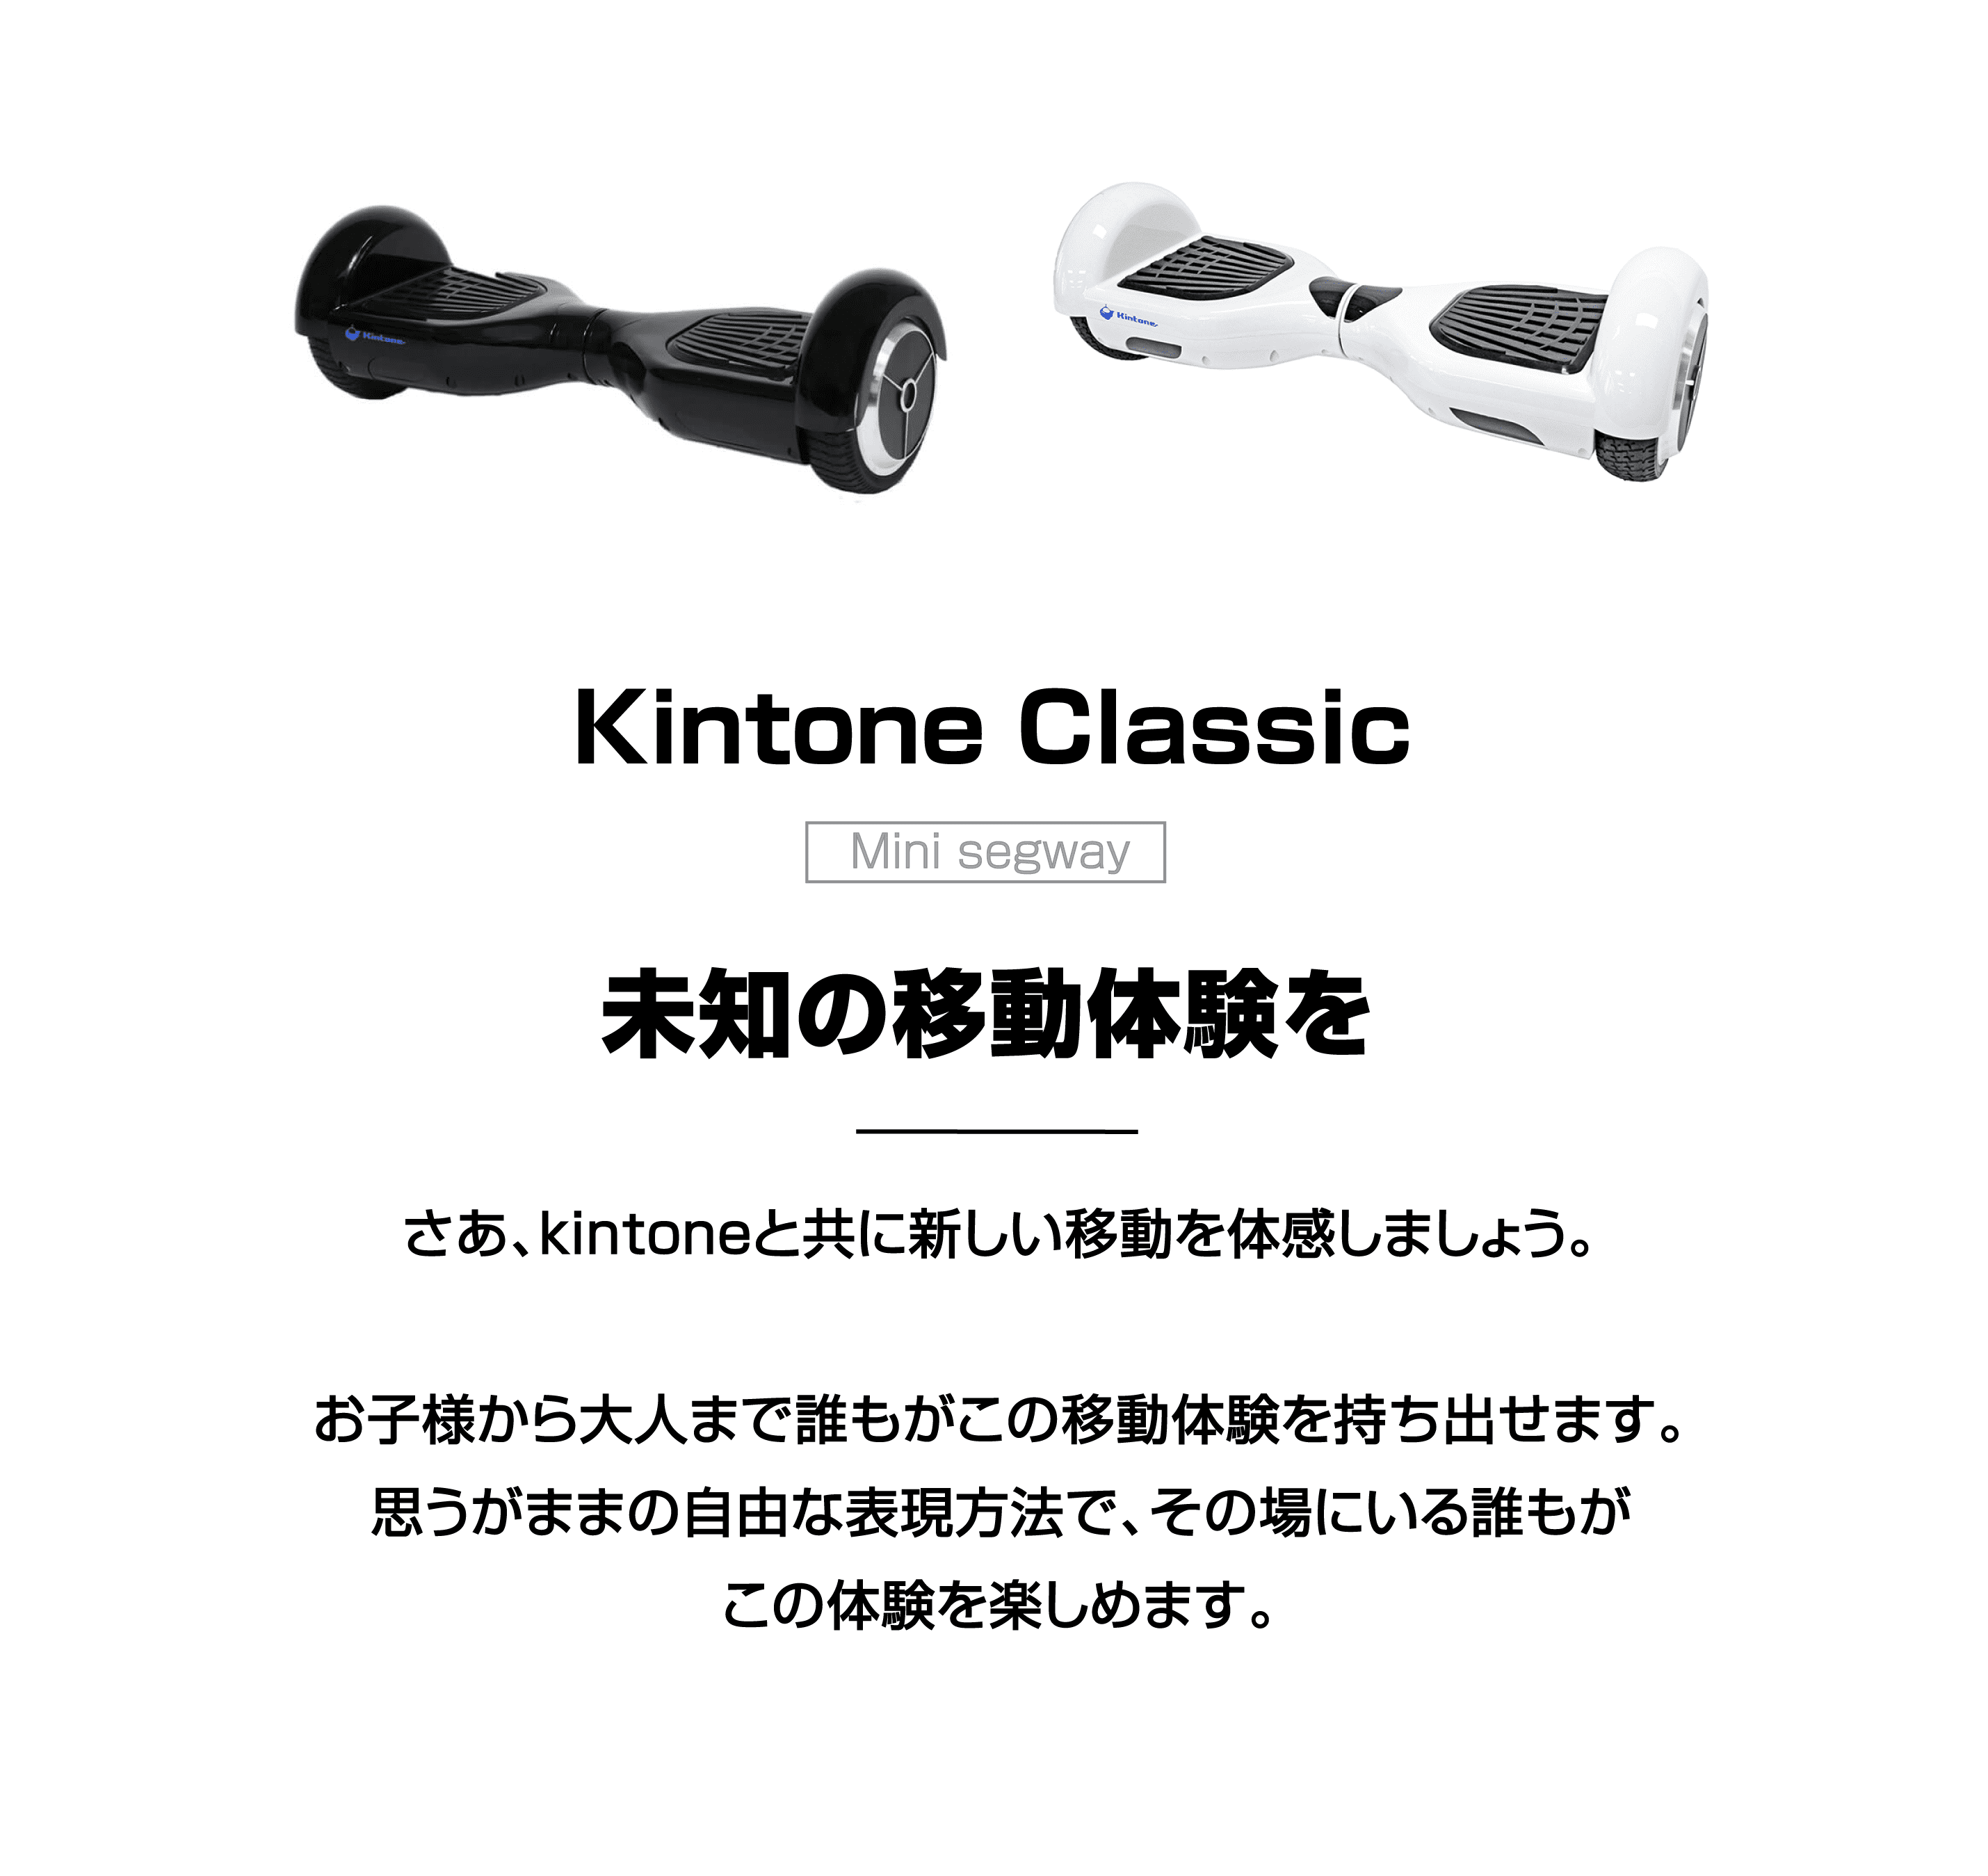 Kintone Classic ミニセグウェイ ホワイト 新品未開封